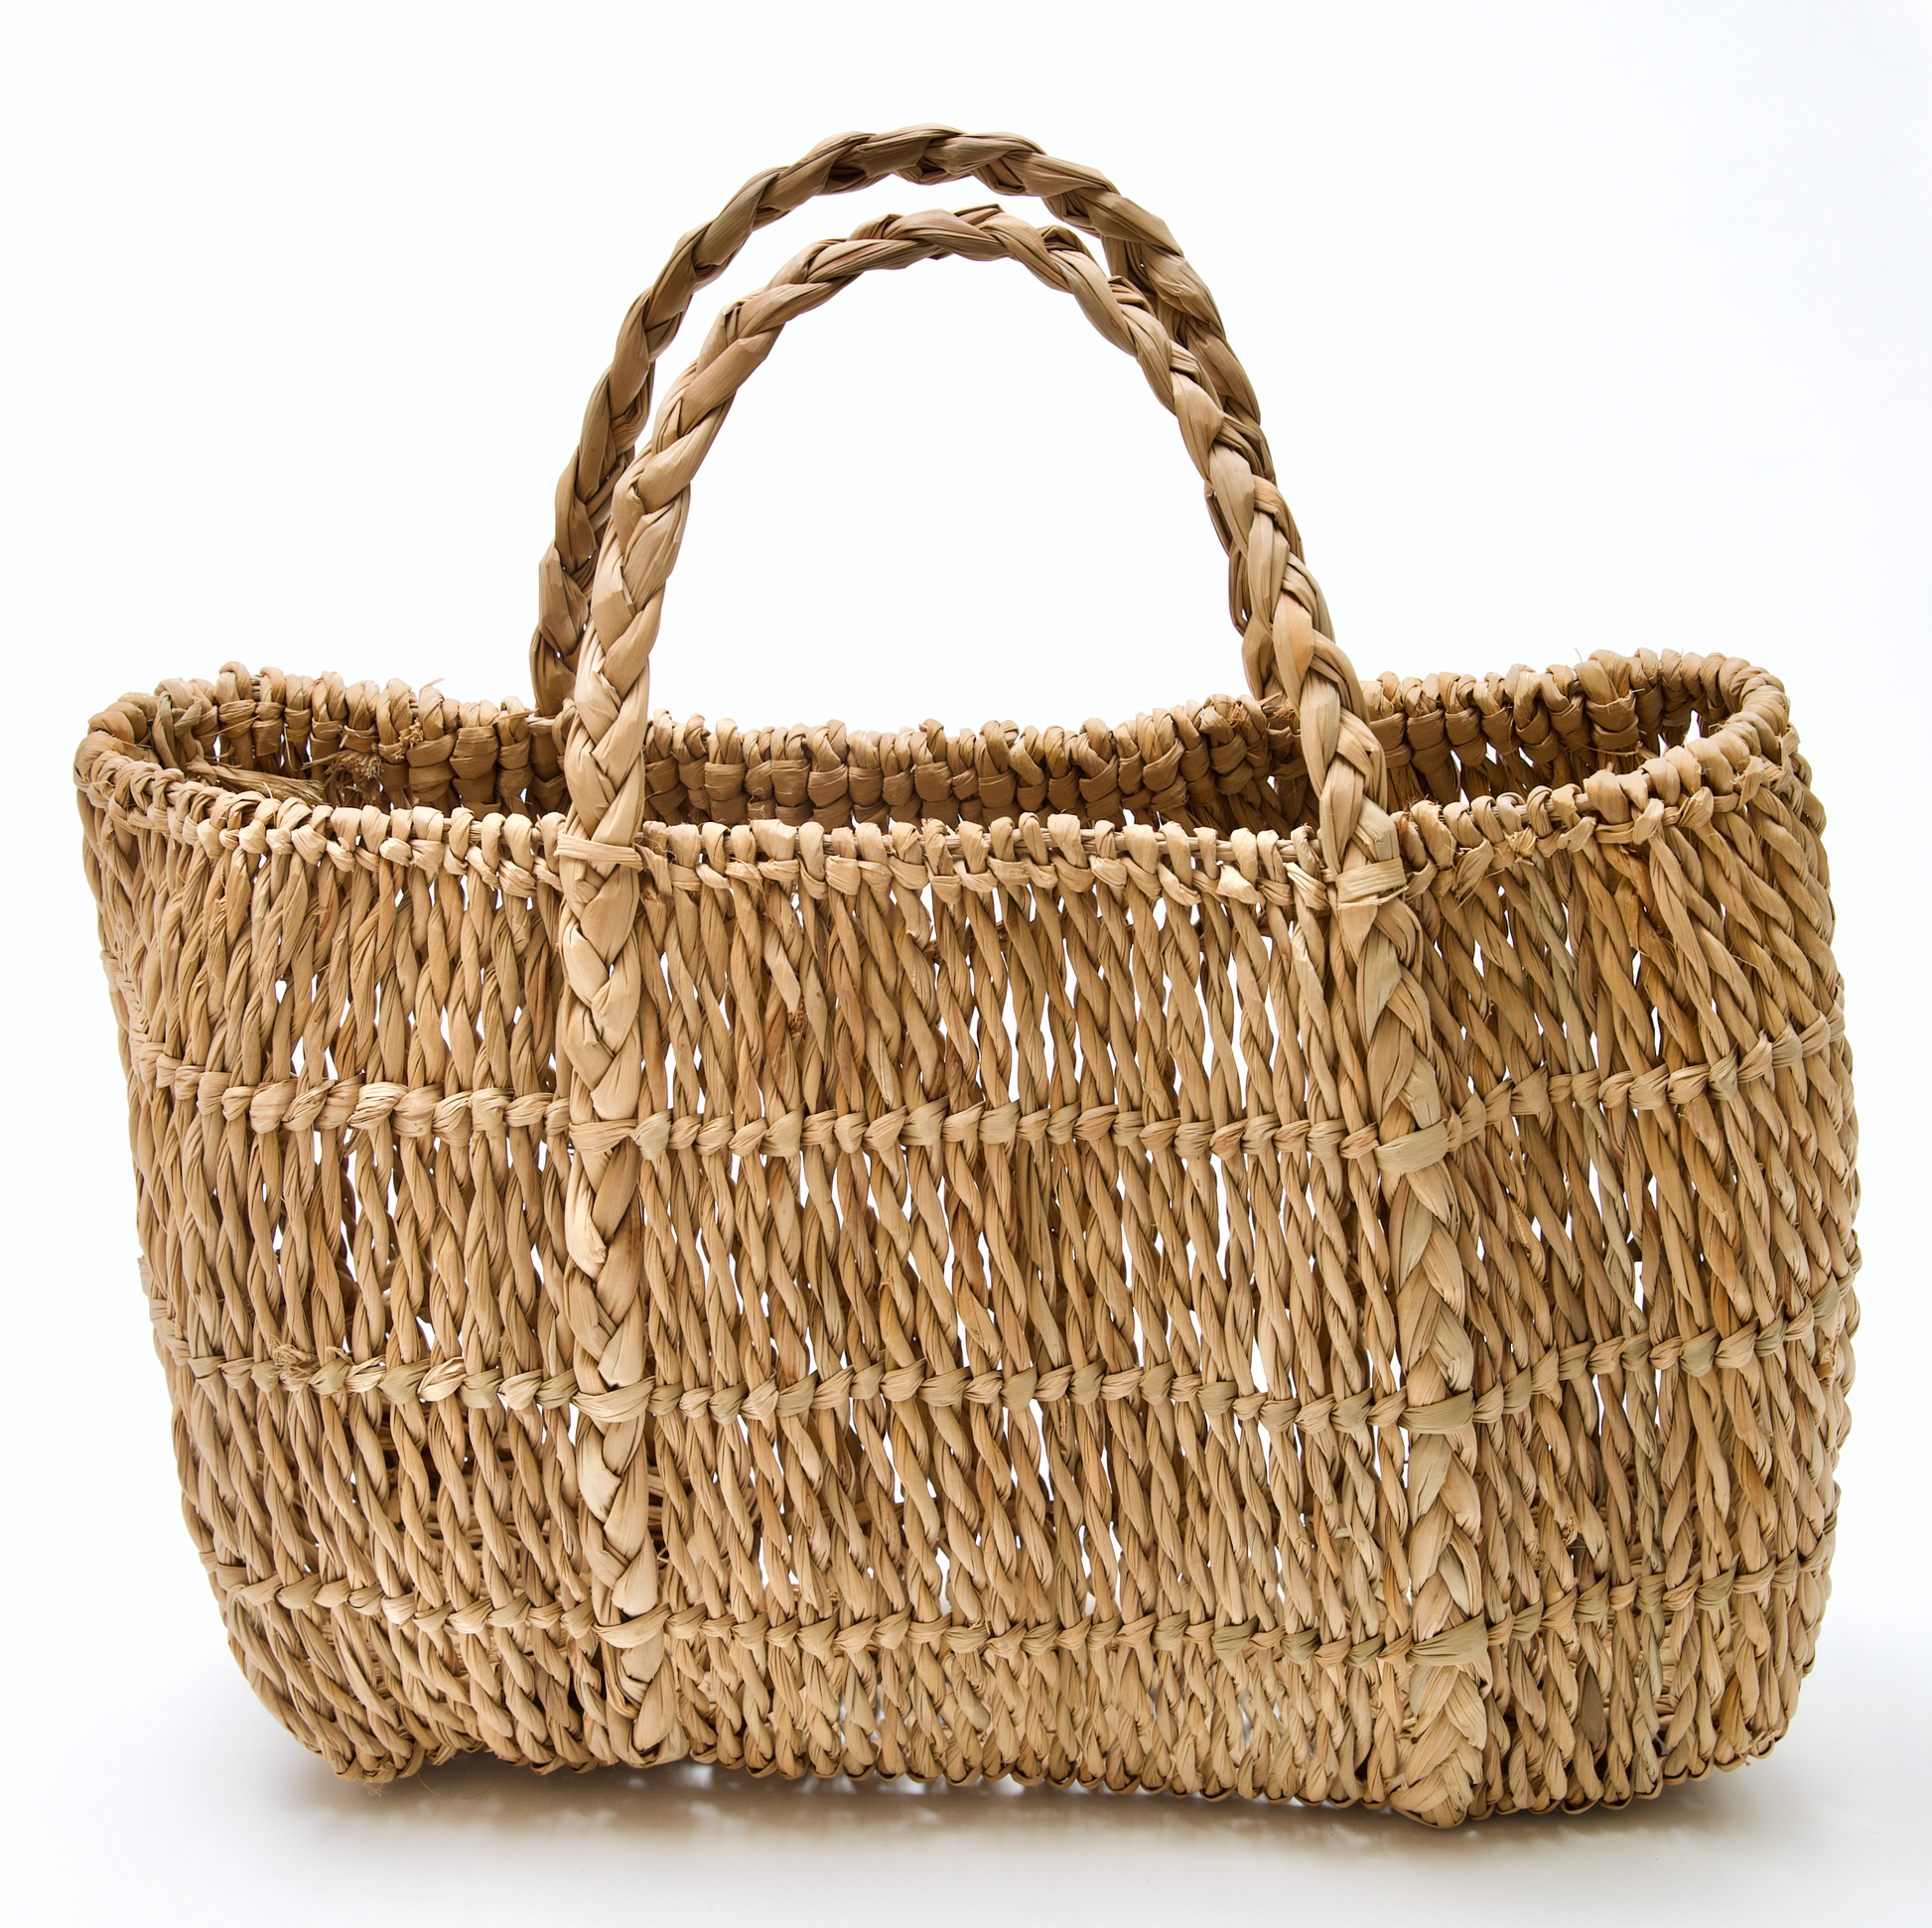 Intiearth inea straw market beach basket with braid detail